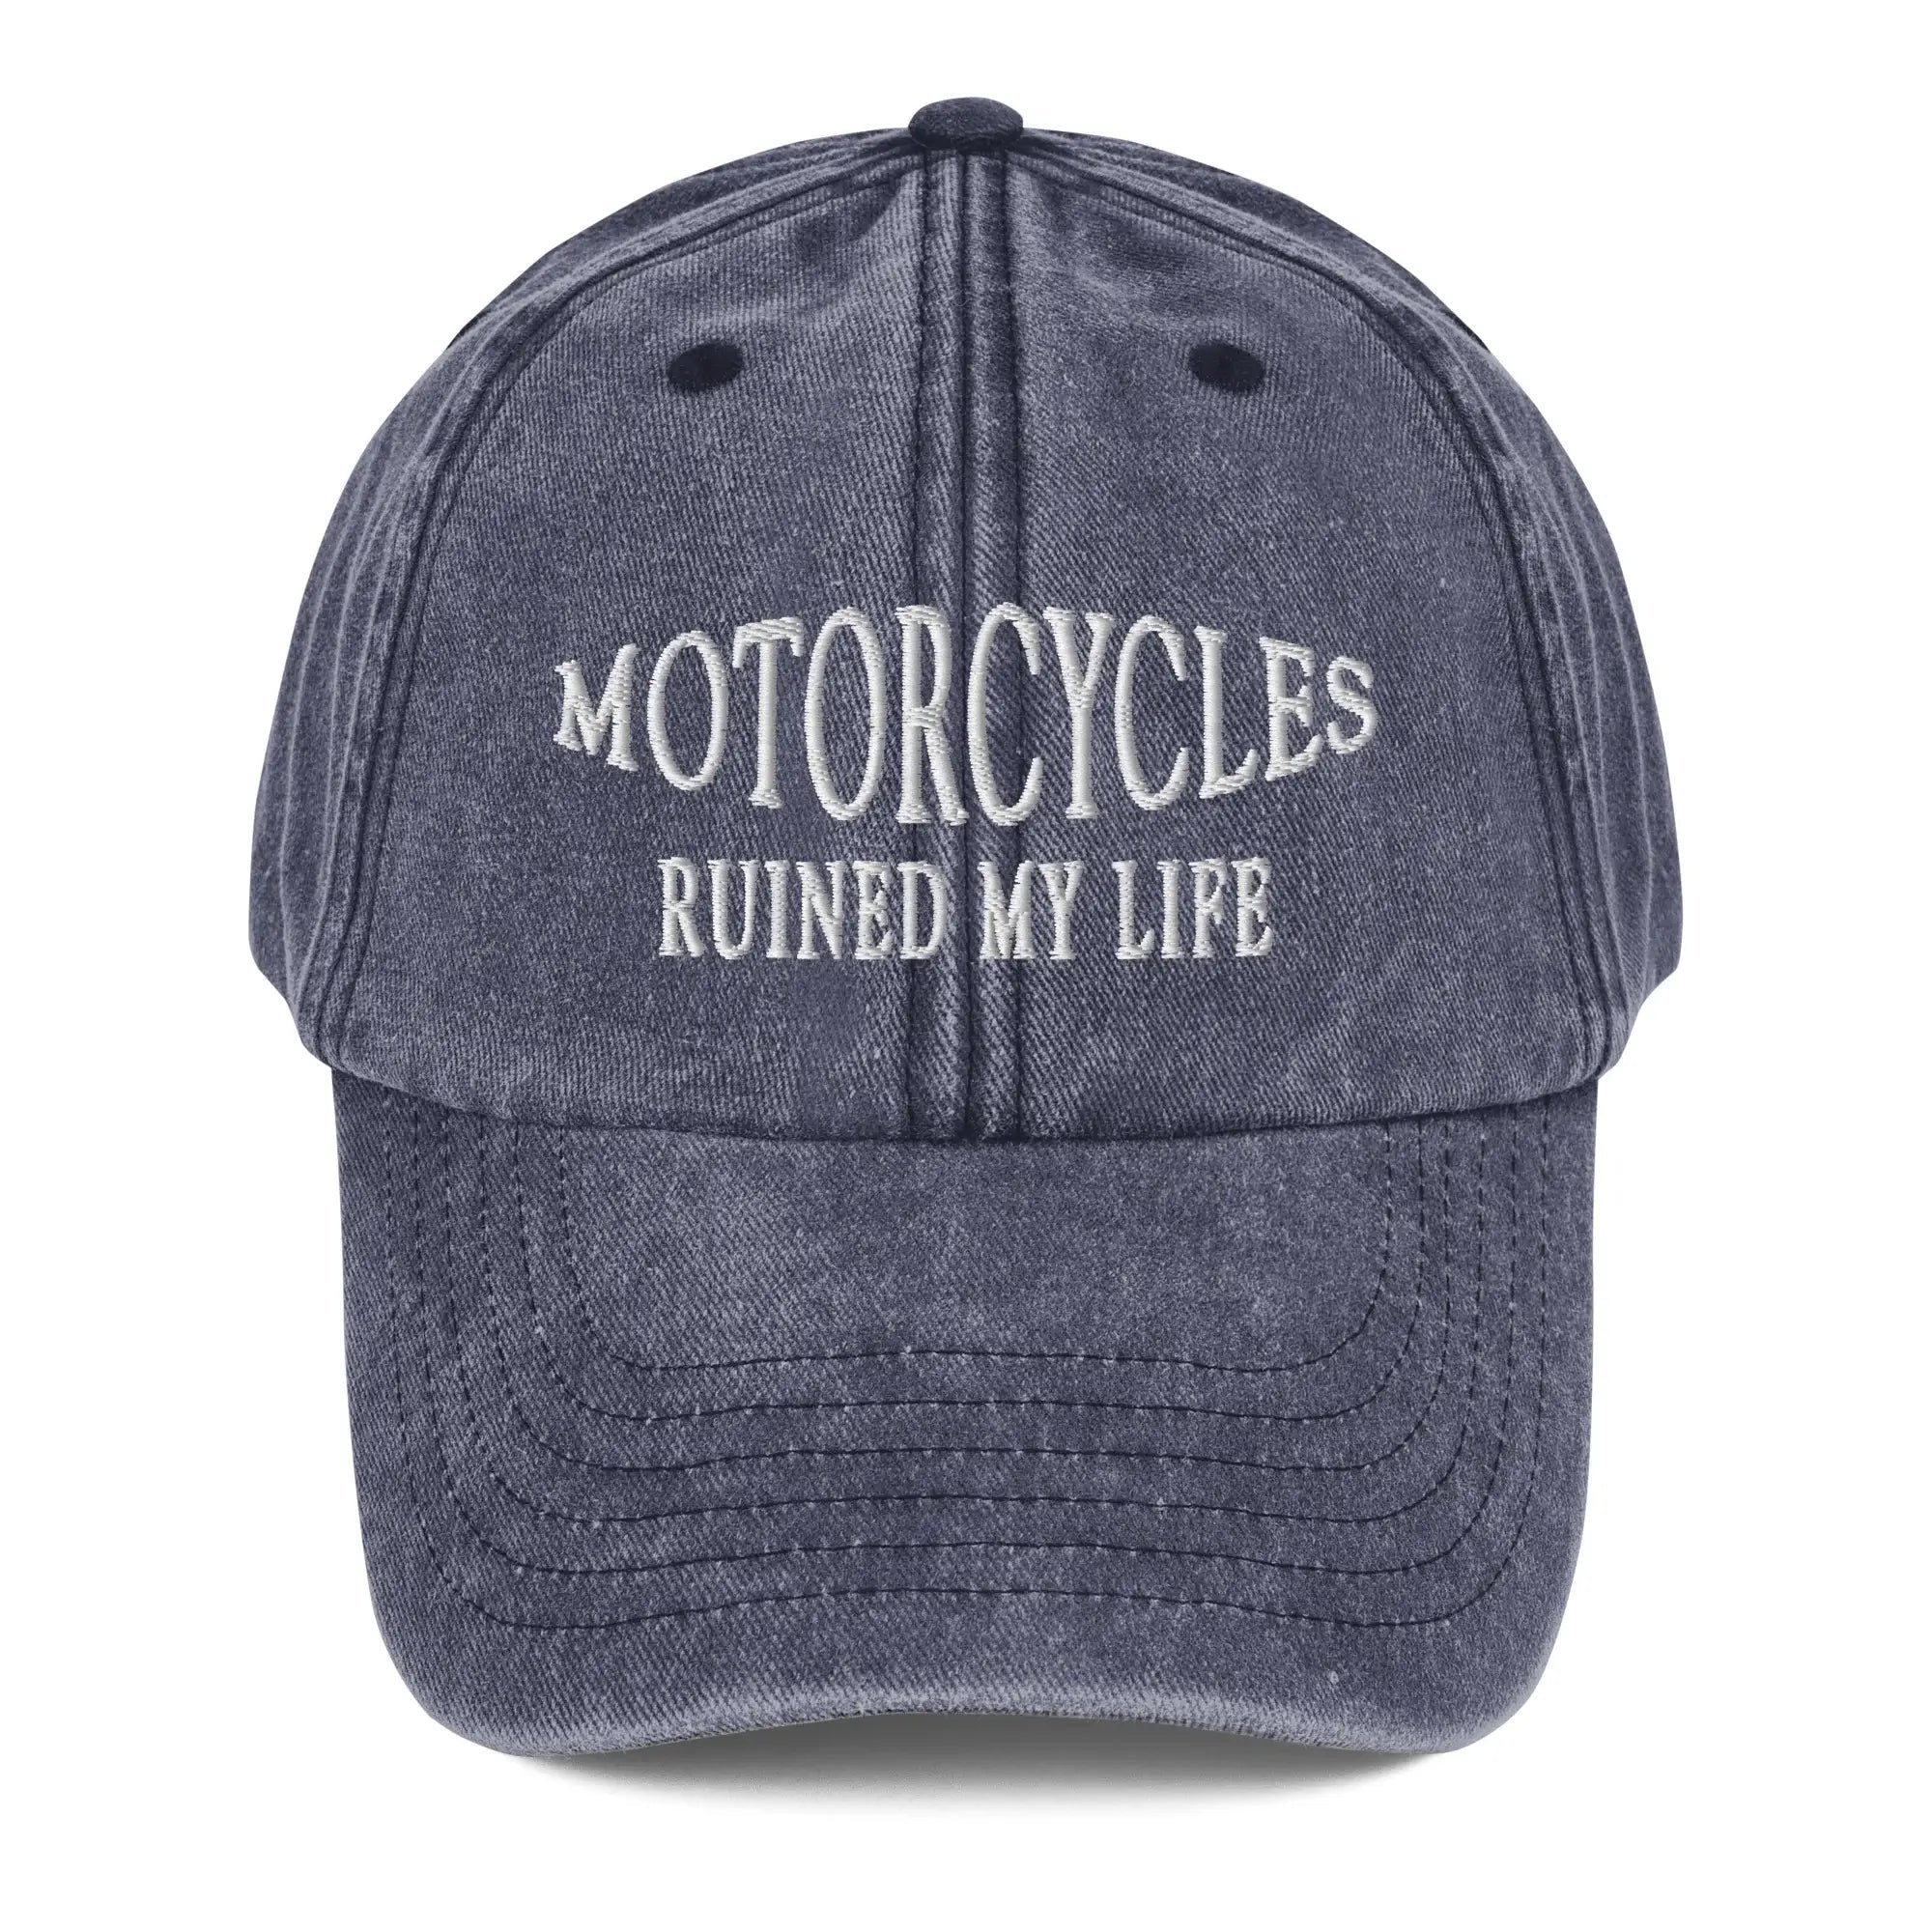 Motorcycles Ruined My Life {Gorra Vintage}